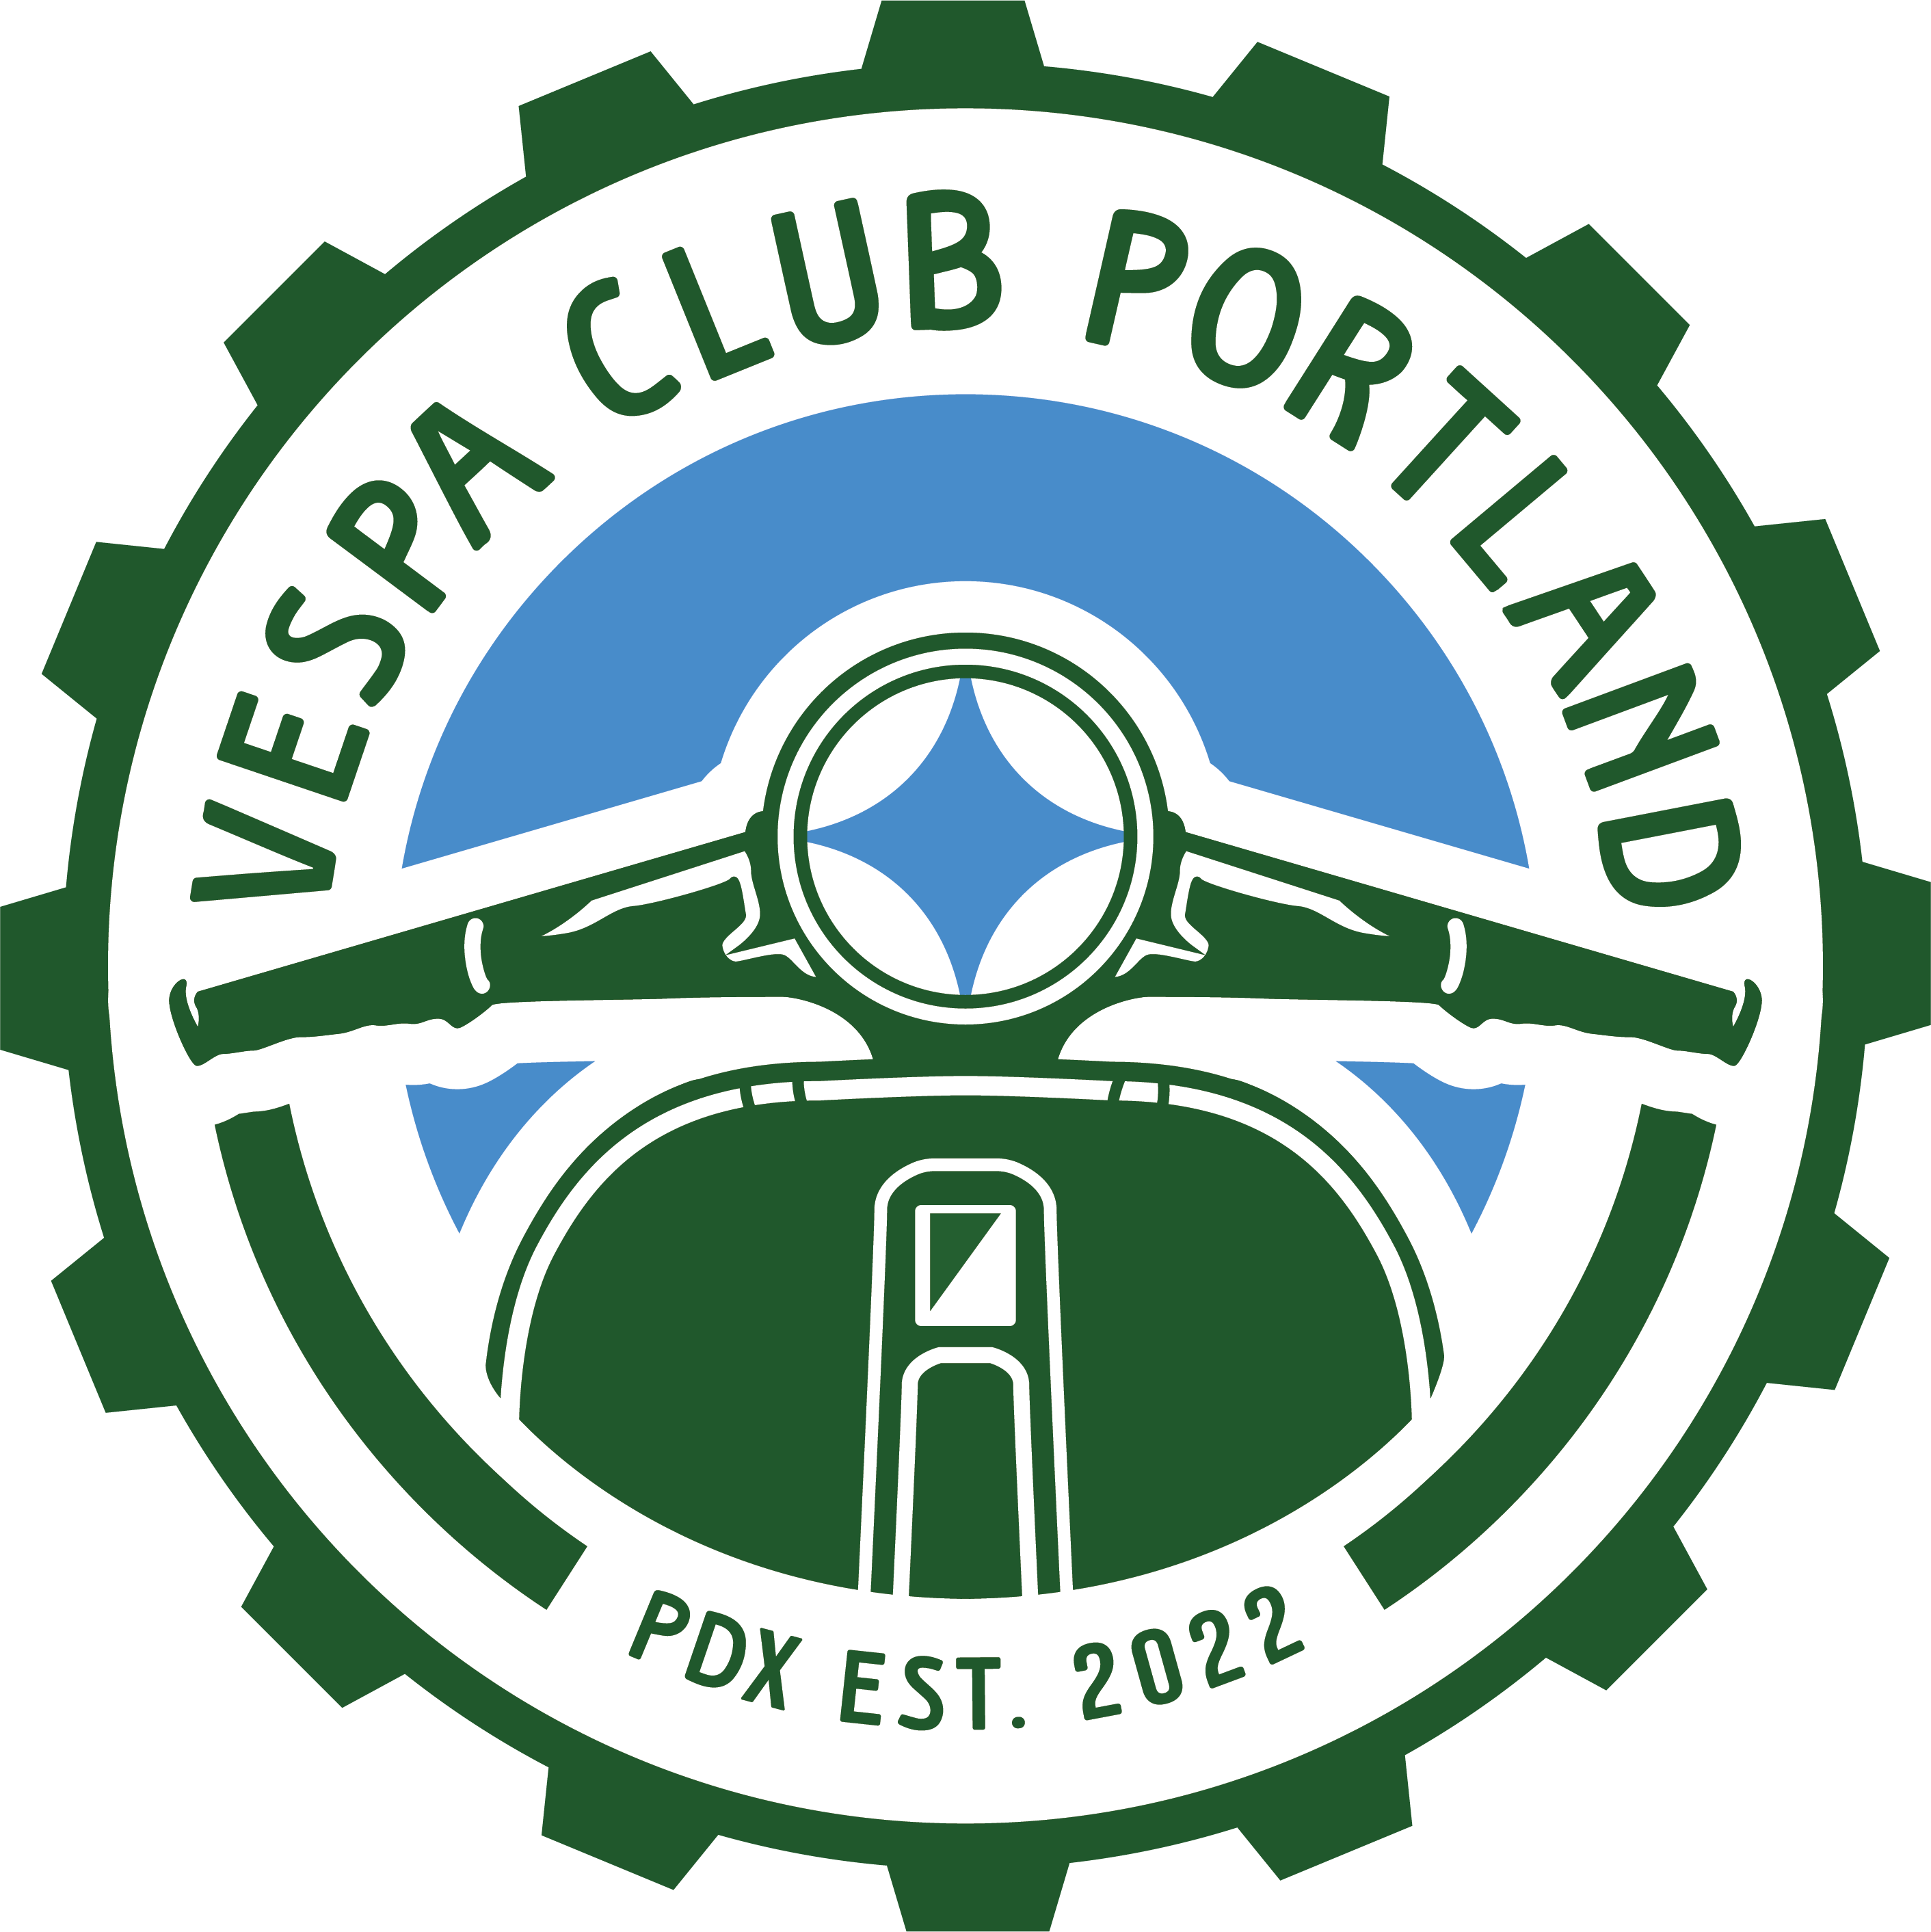 Vespa Club Portland